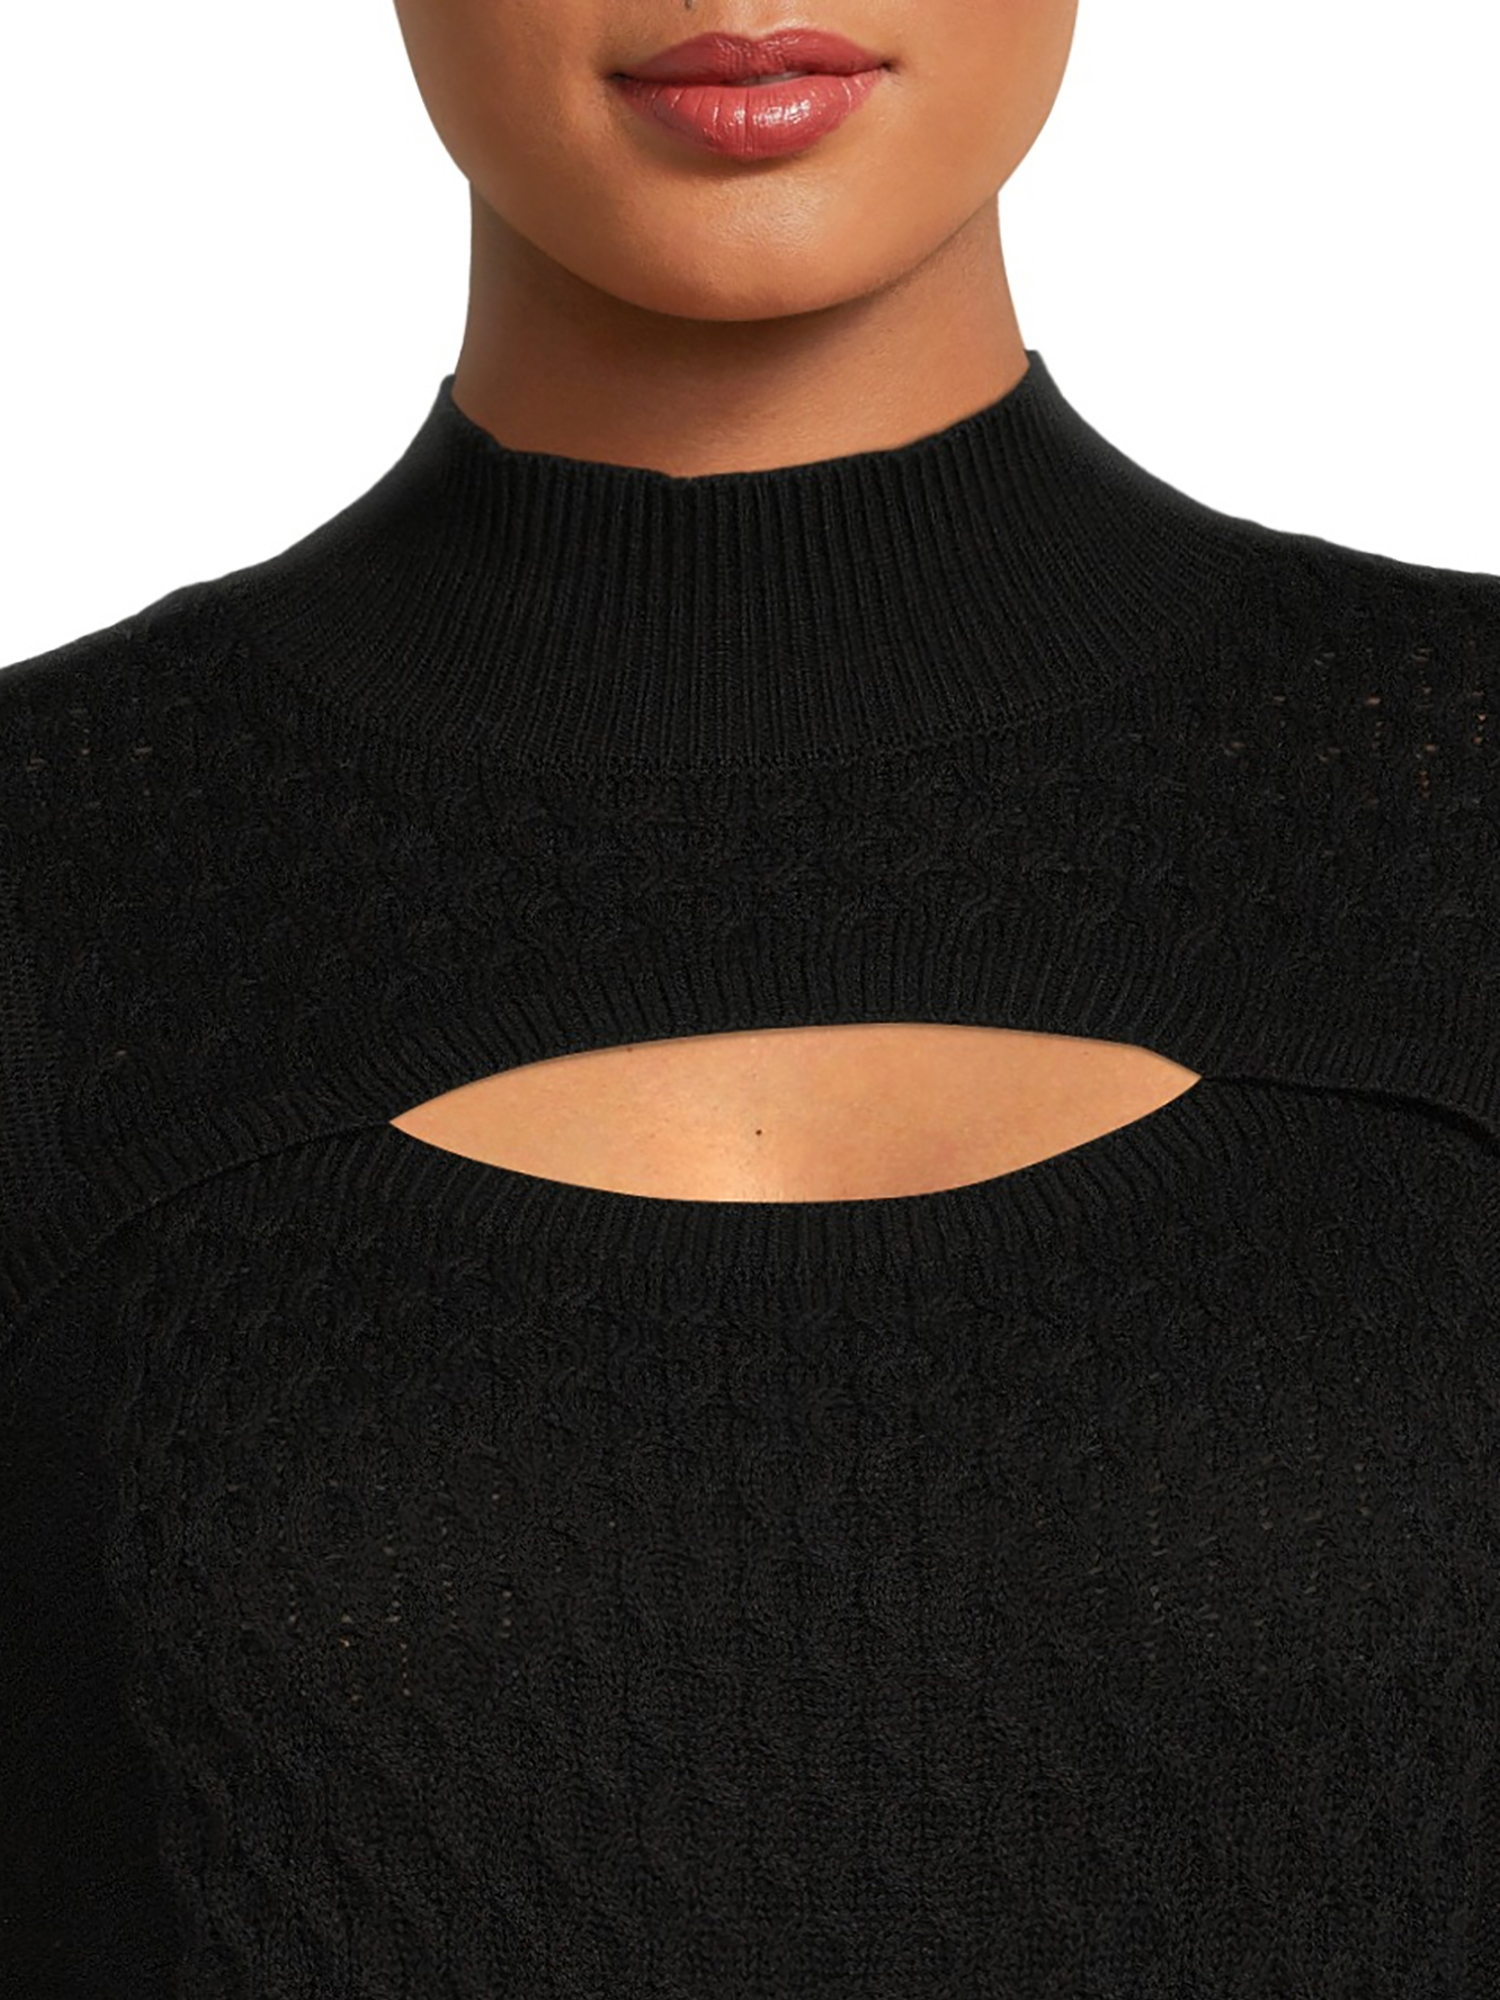 Terra & Sky Women's Cutout Pullover Sweater - image 4 of 5